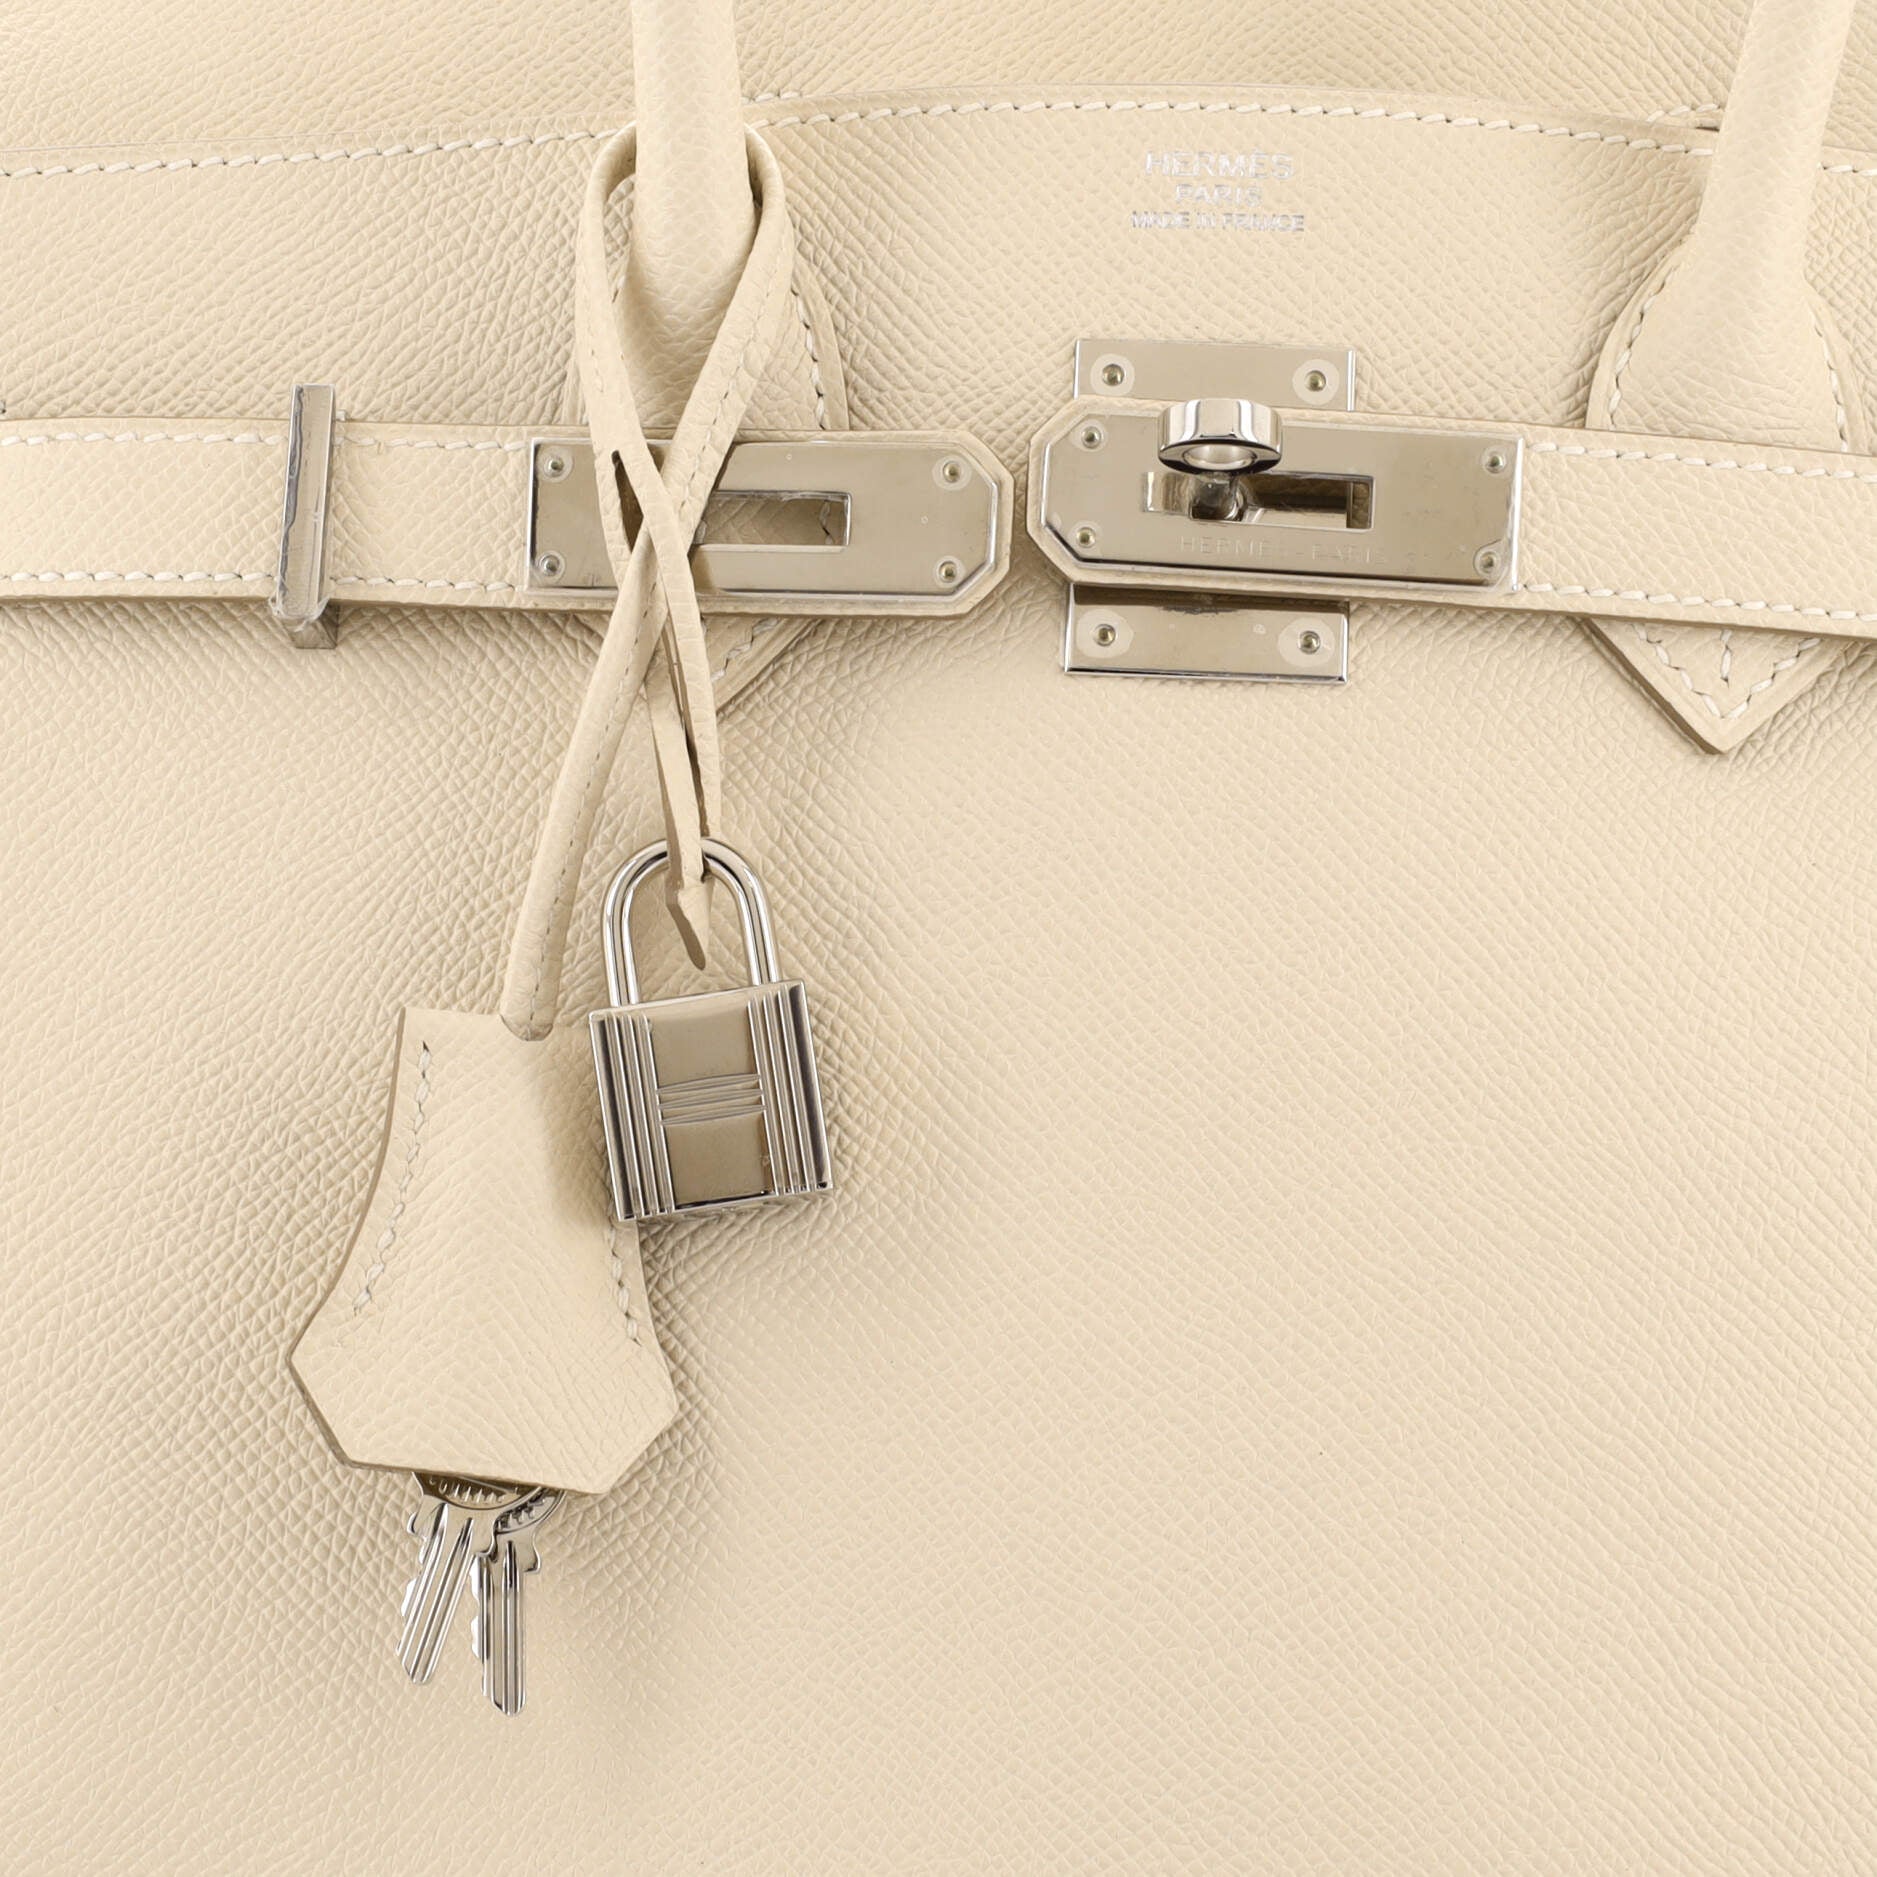 Hermes pre-owned neutral 2008 Birkin 35 Bag in Epsom leather